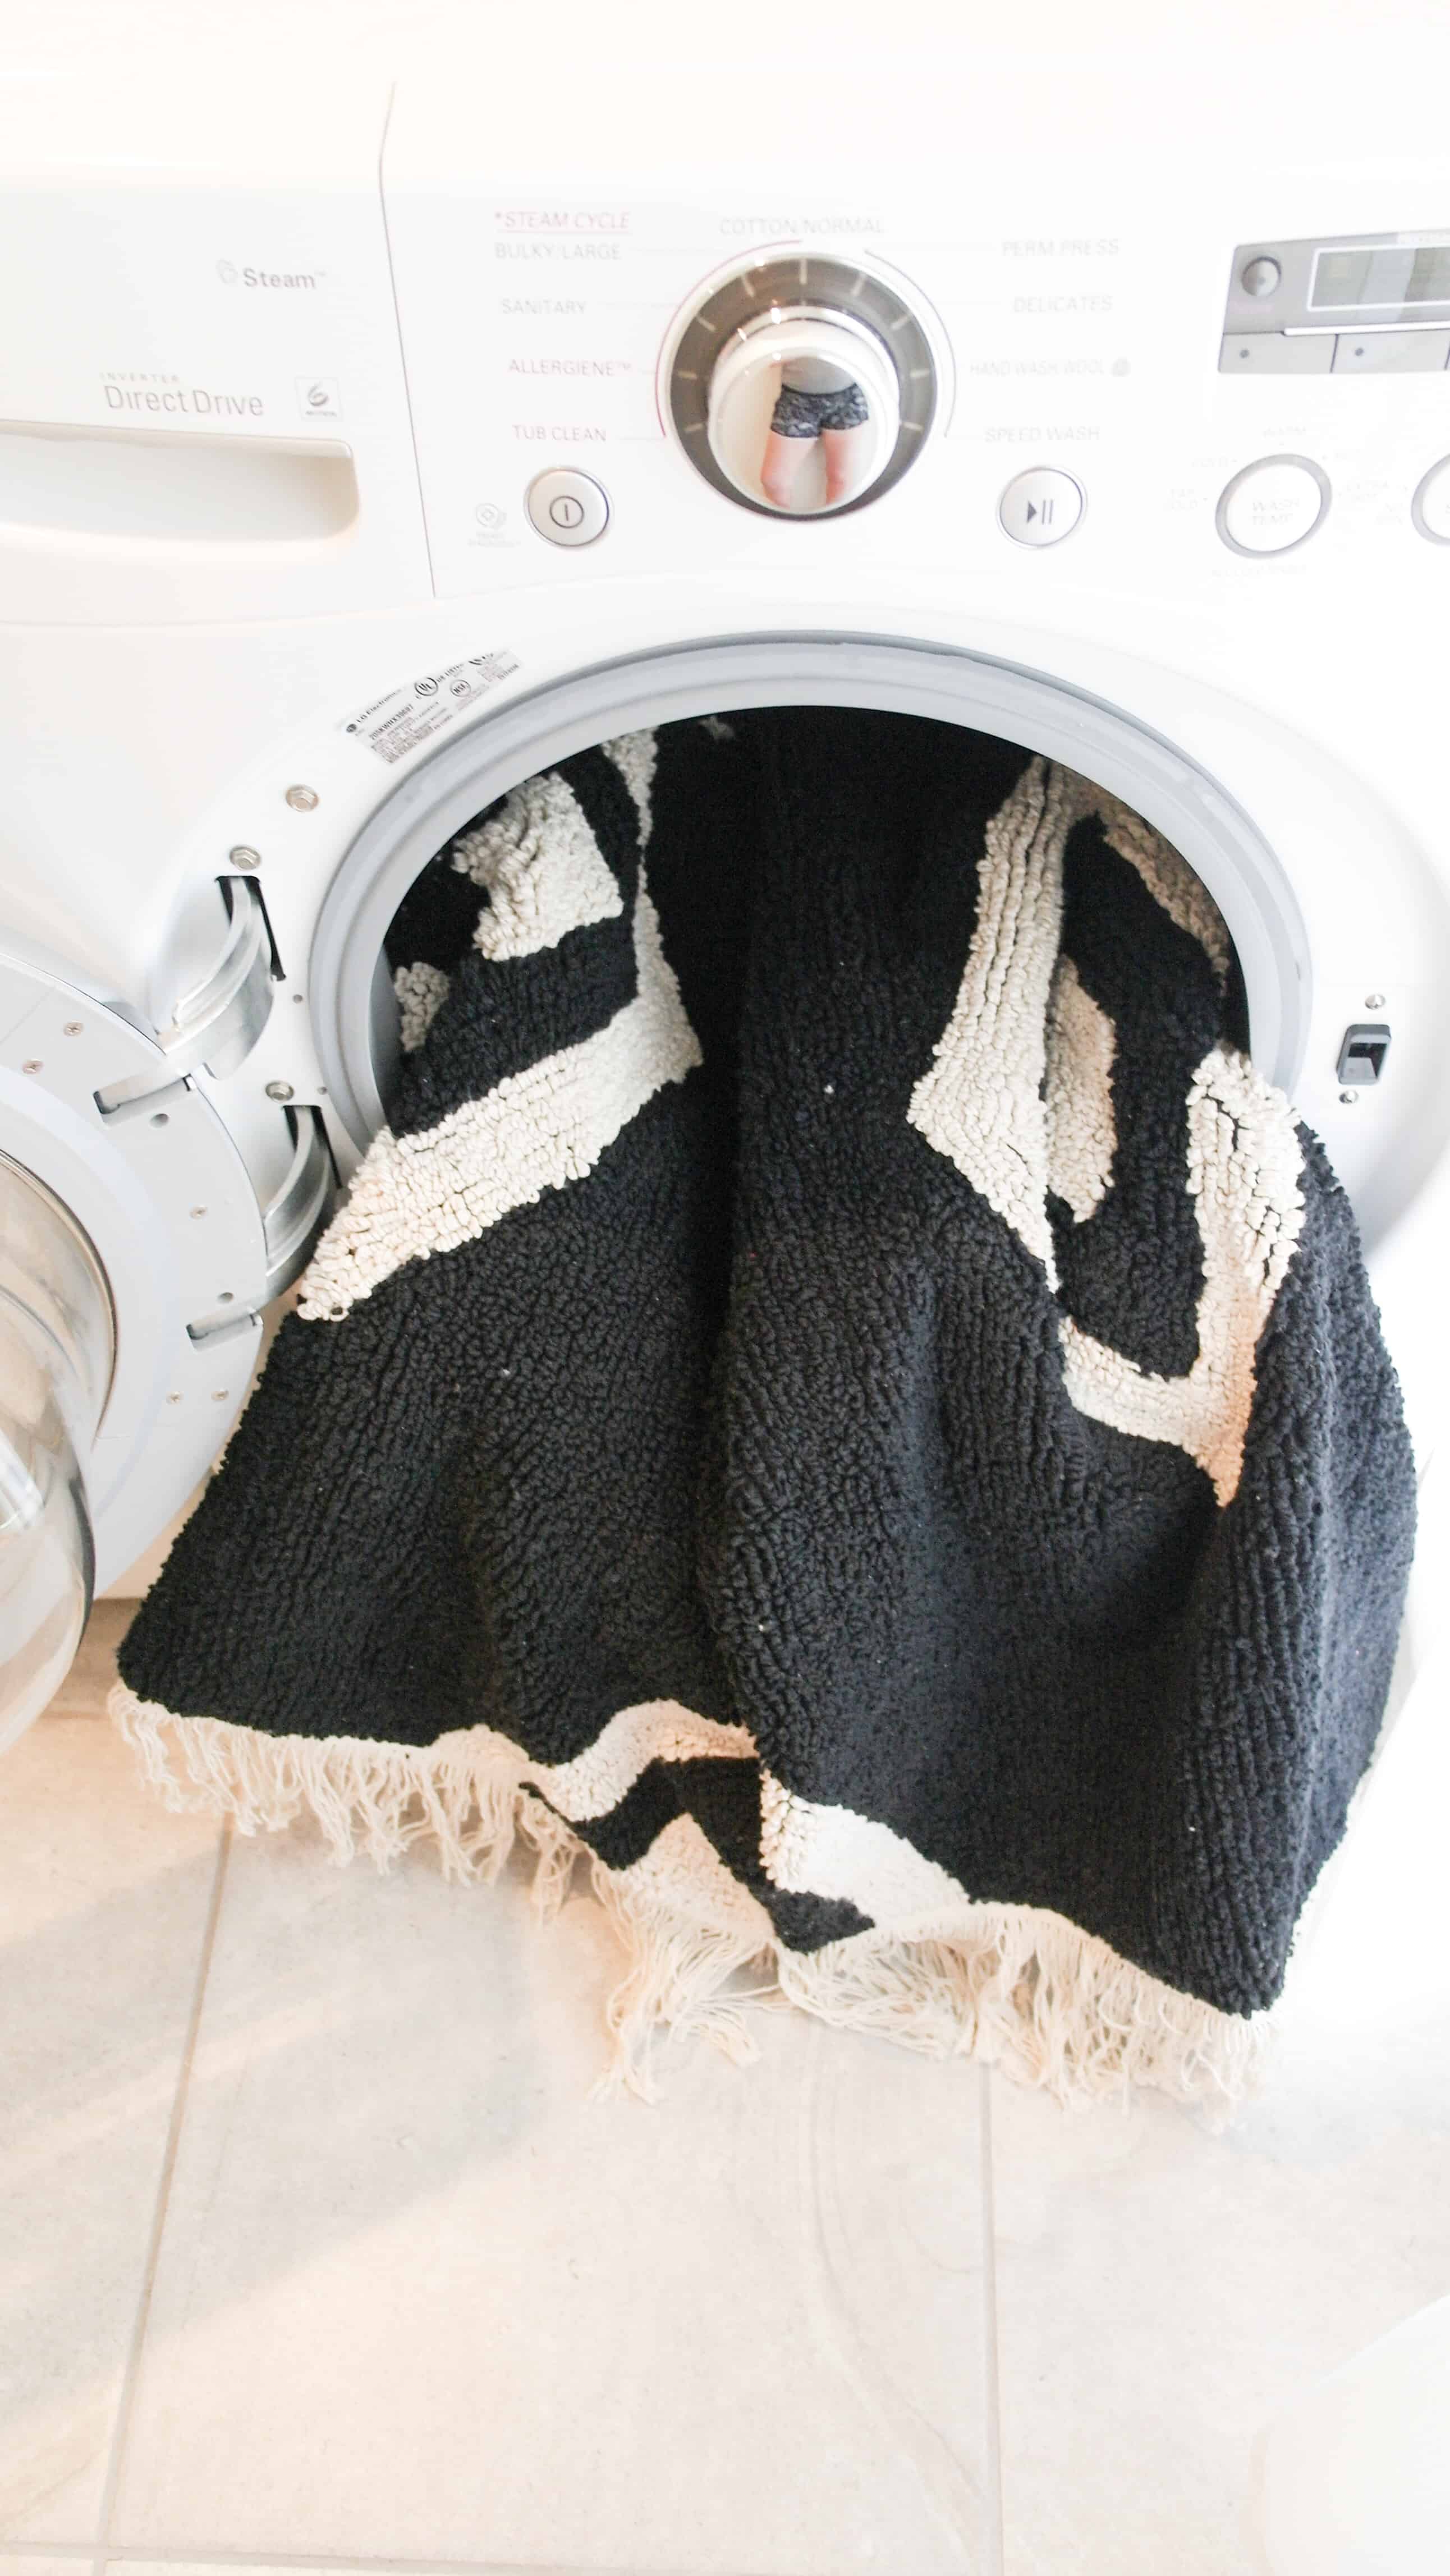 Lorena canals rug in washing machine